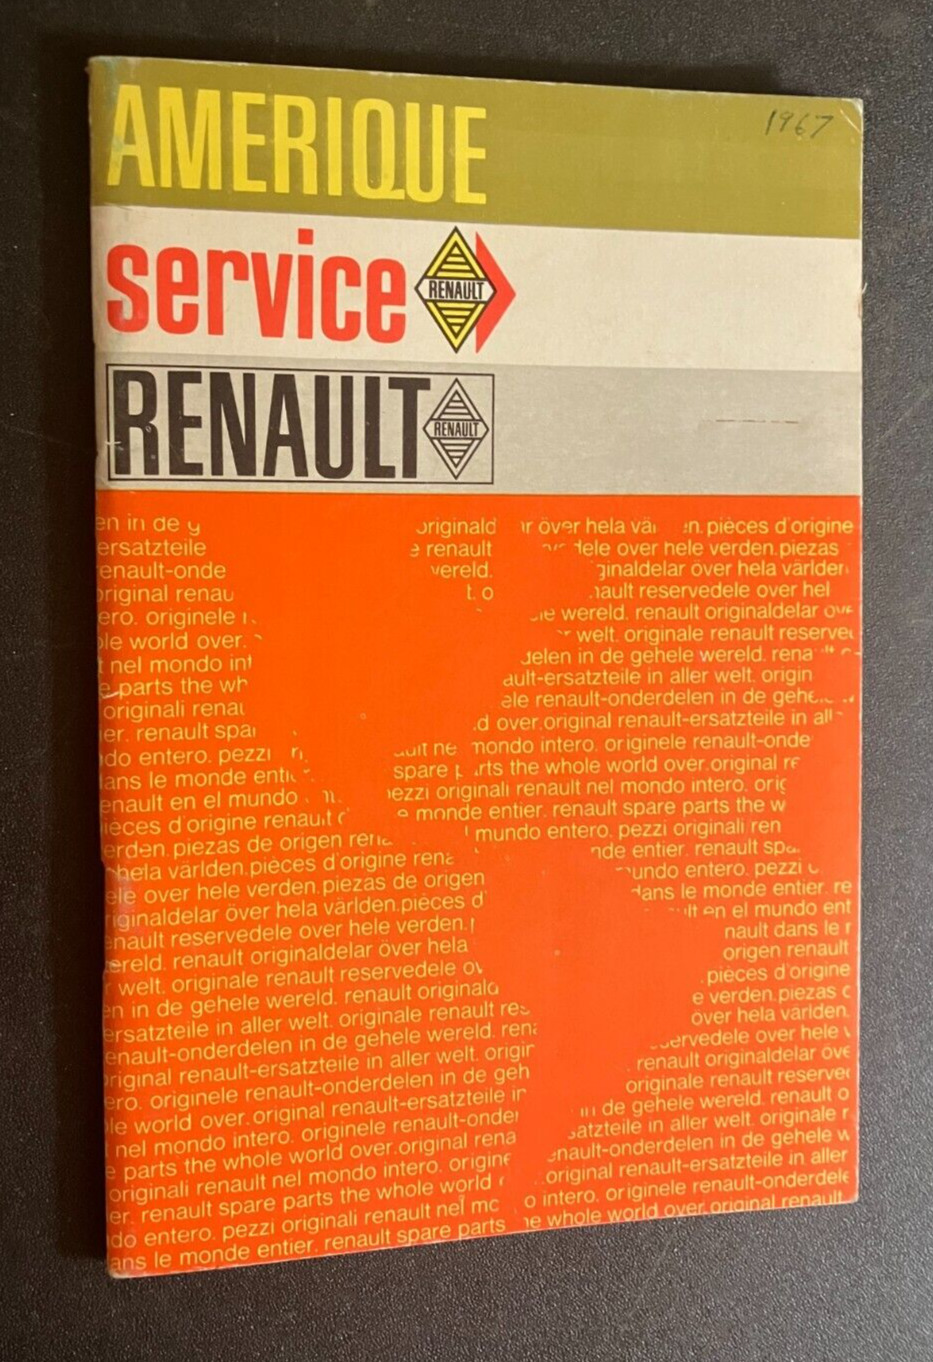 1967 American Renault Dealer Network Address Book - Original 53-page - English